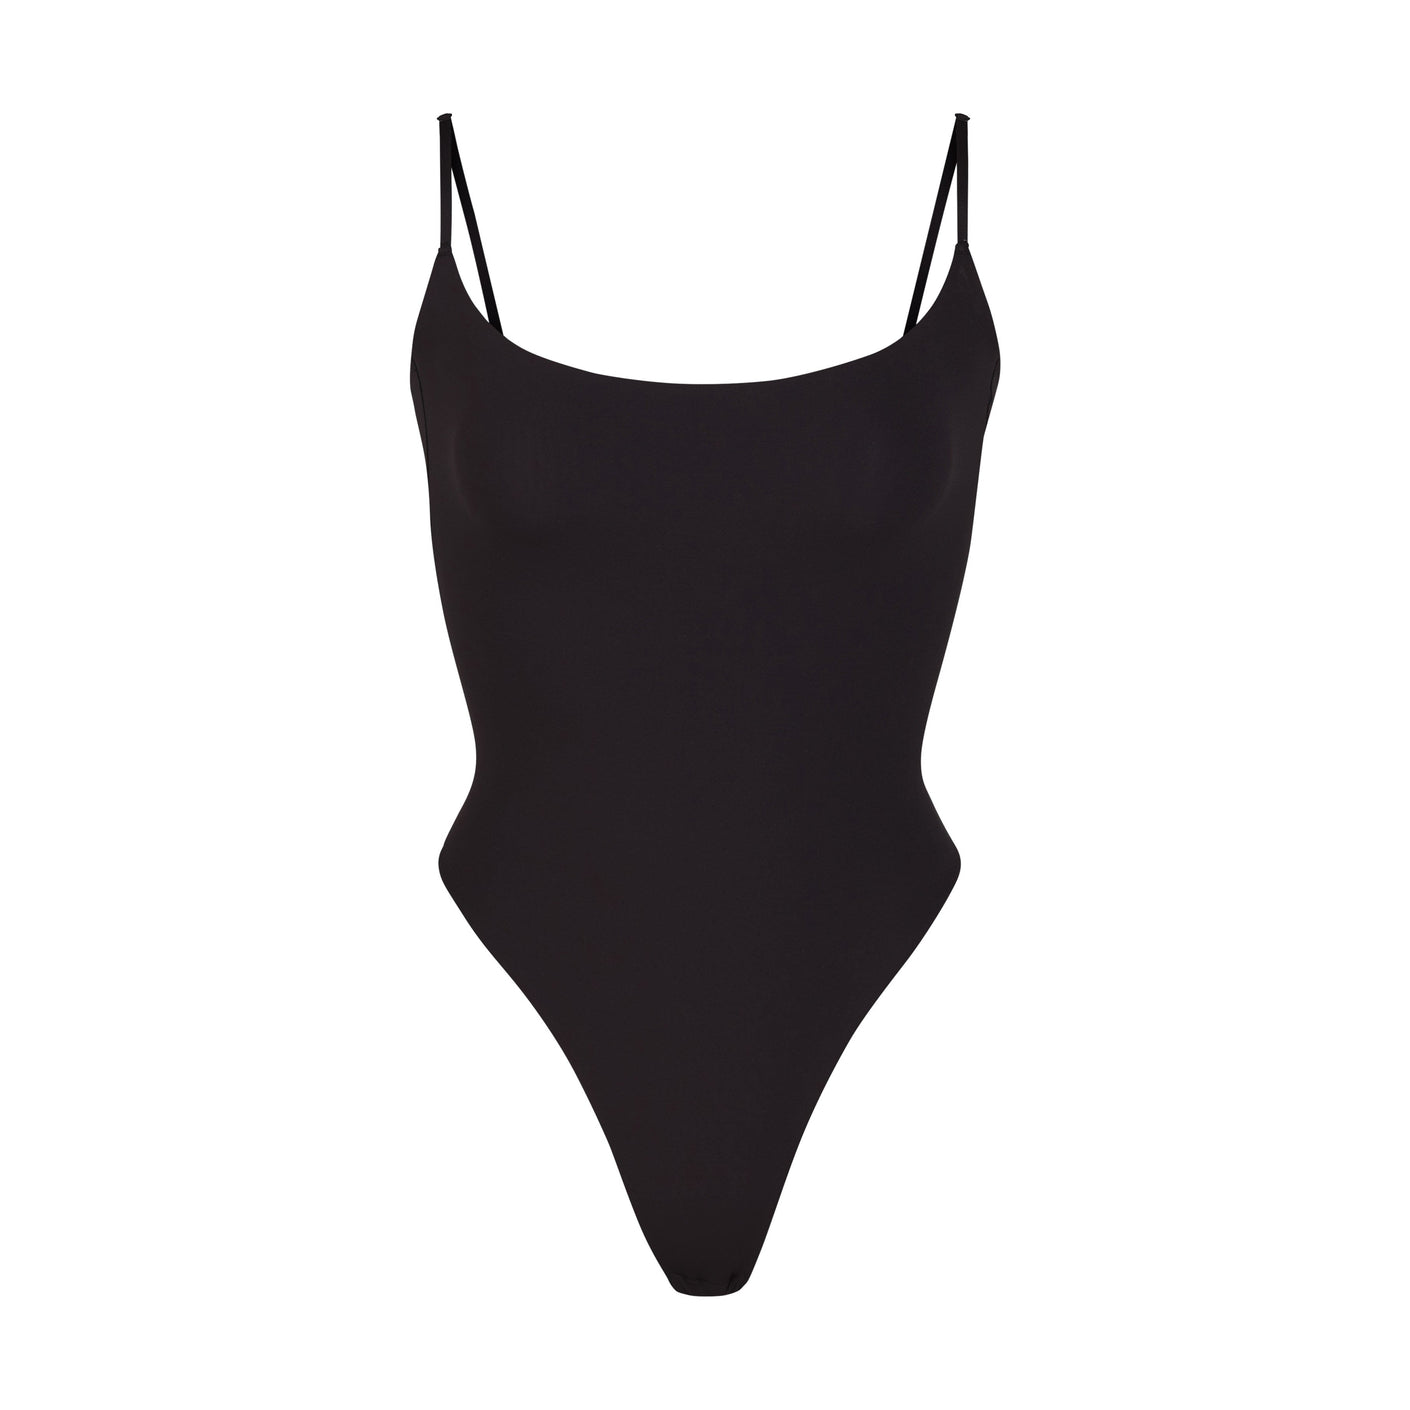 Make It Last Cami Bodysuit - Black - $23